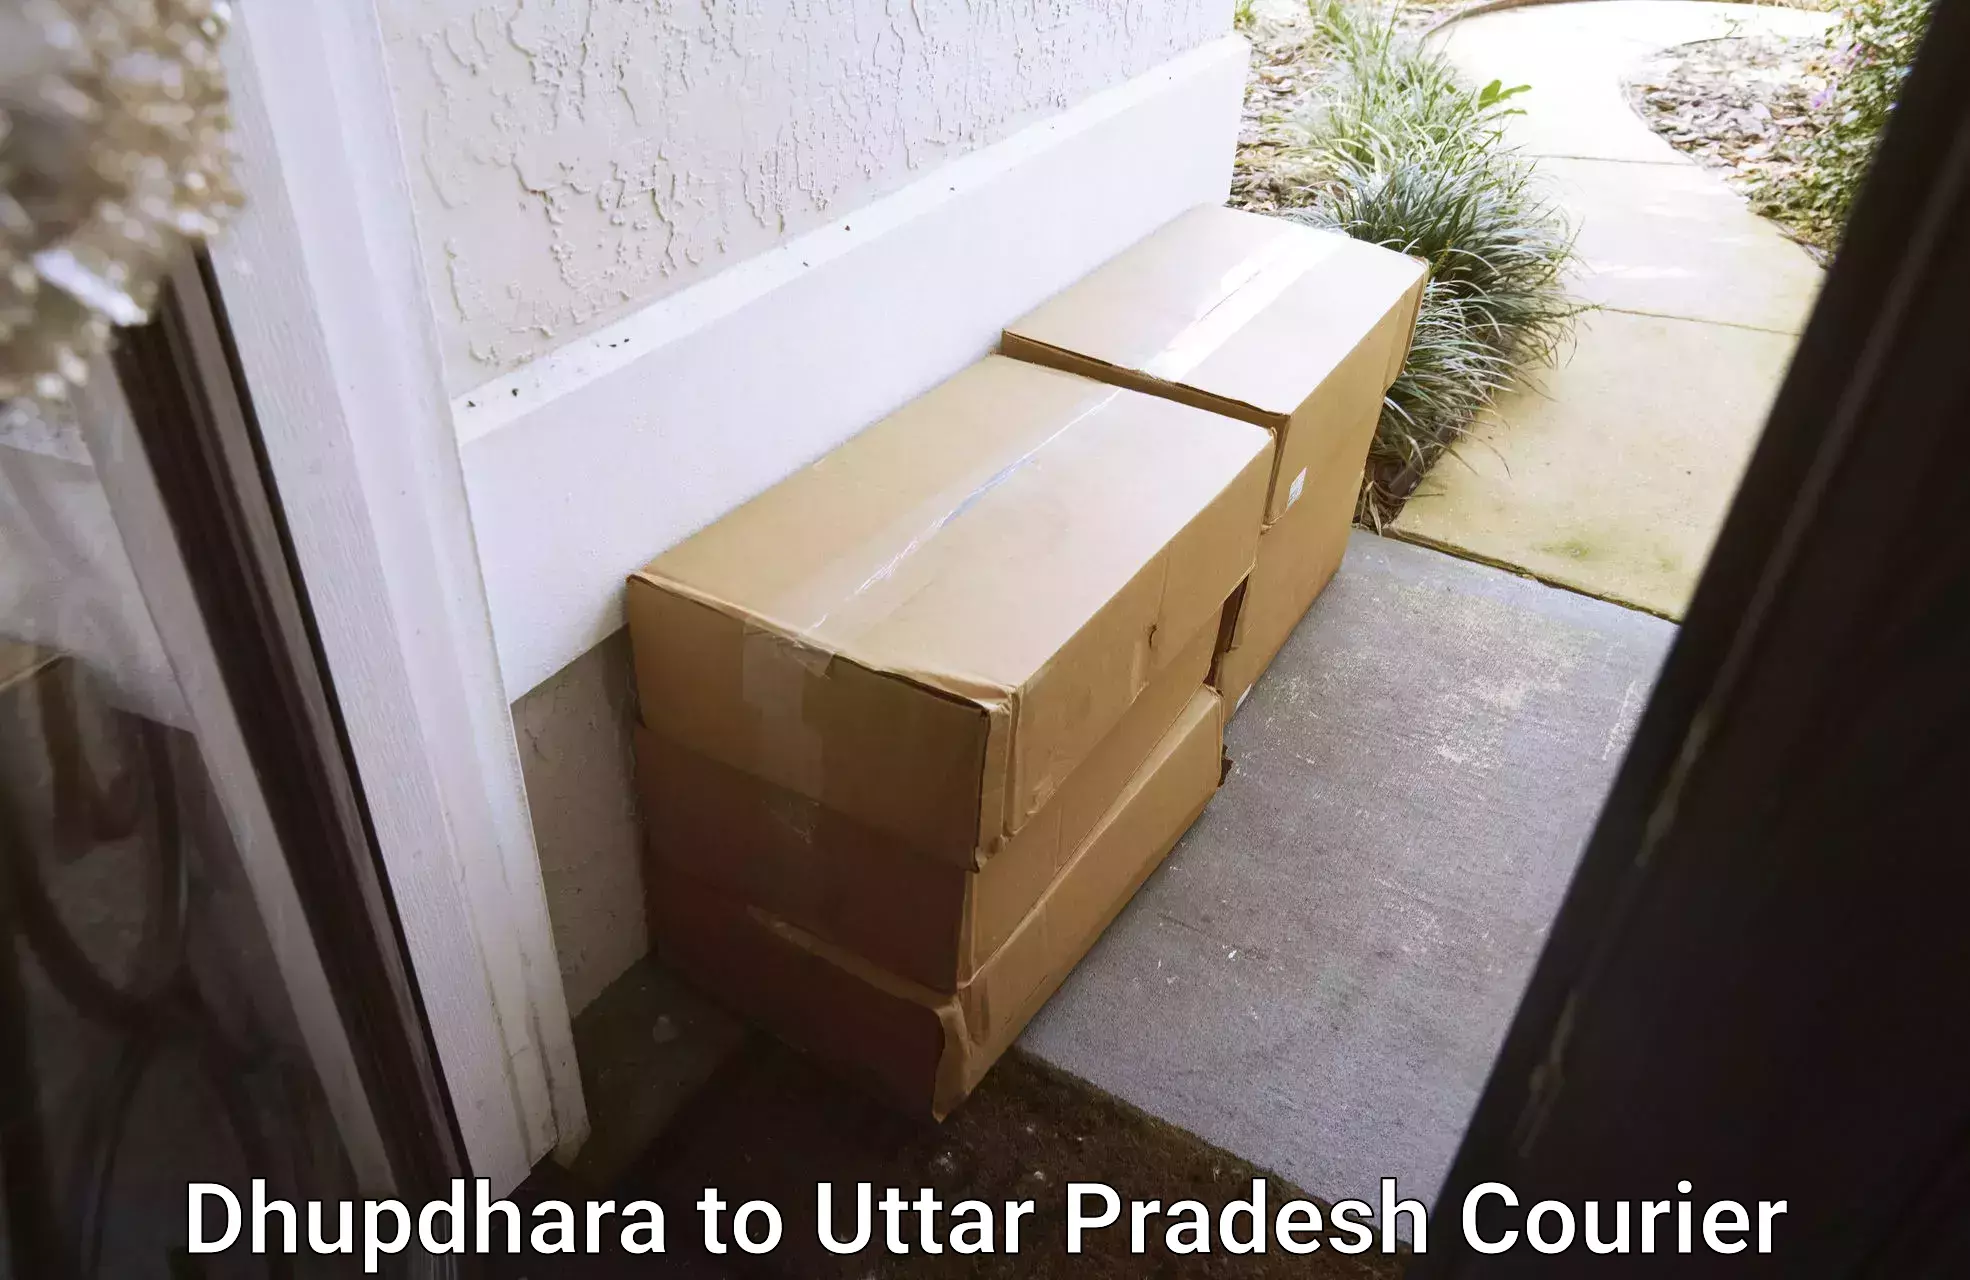 24/7 courier service Dhupdhara to Moradabad